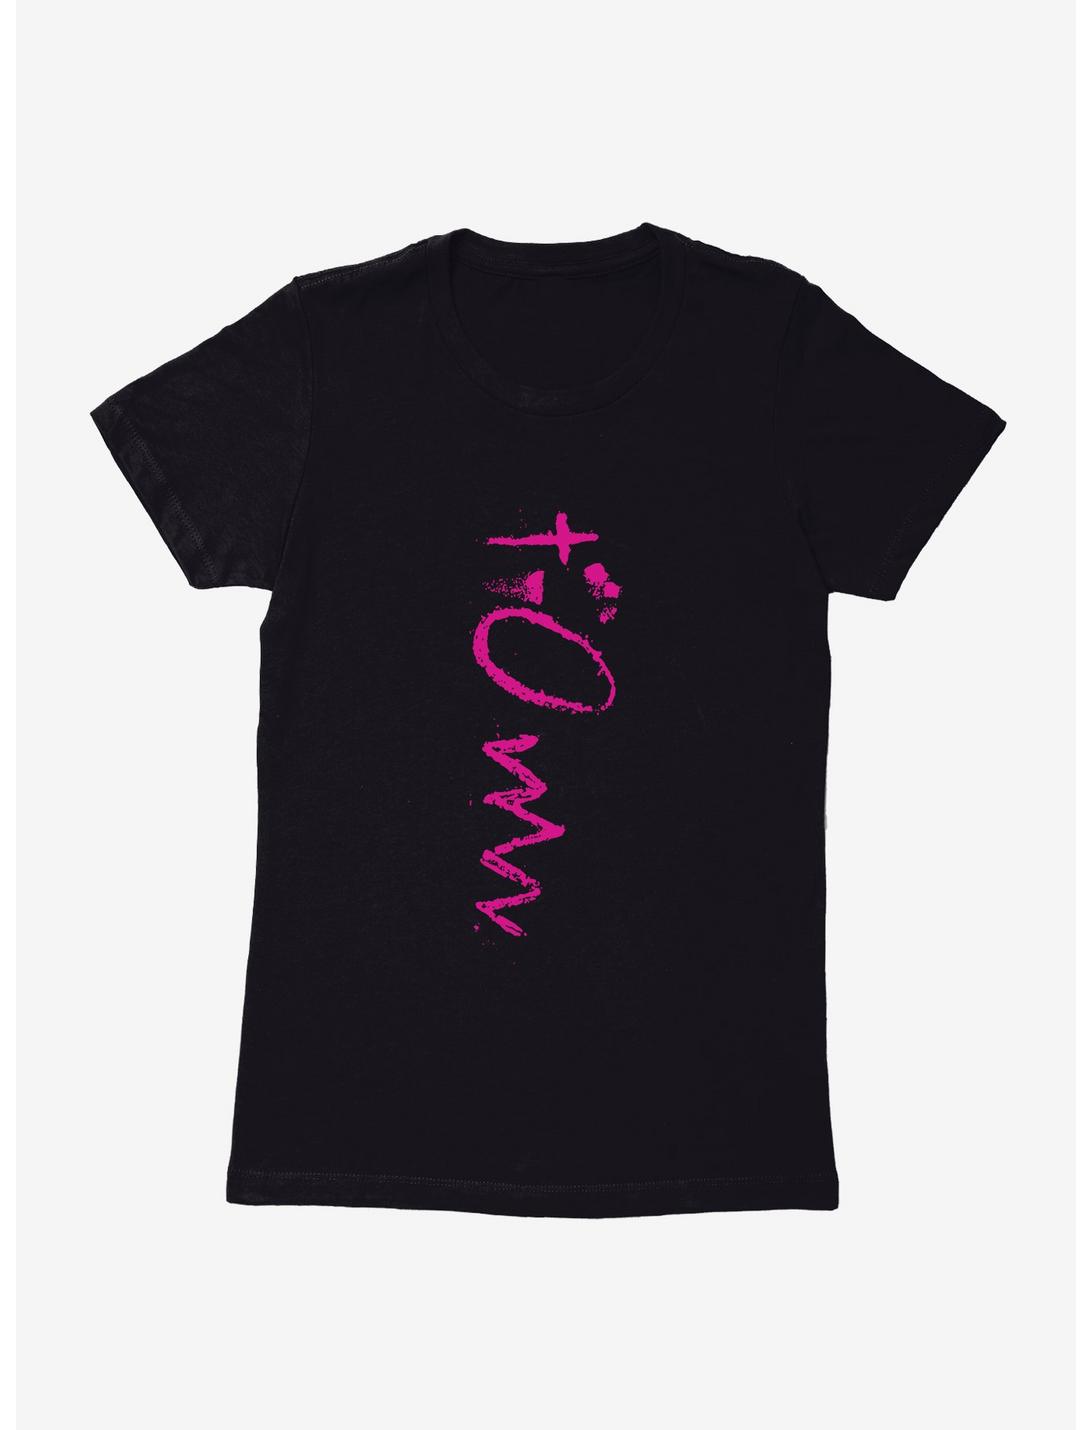 Boy George & Culture Club Symbol Womens T-Shirt, , hi-res